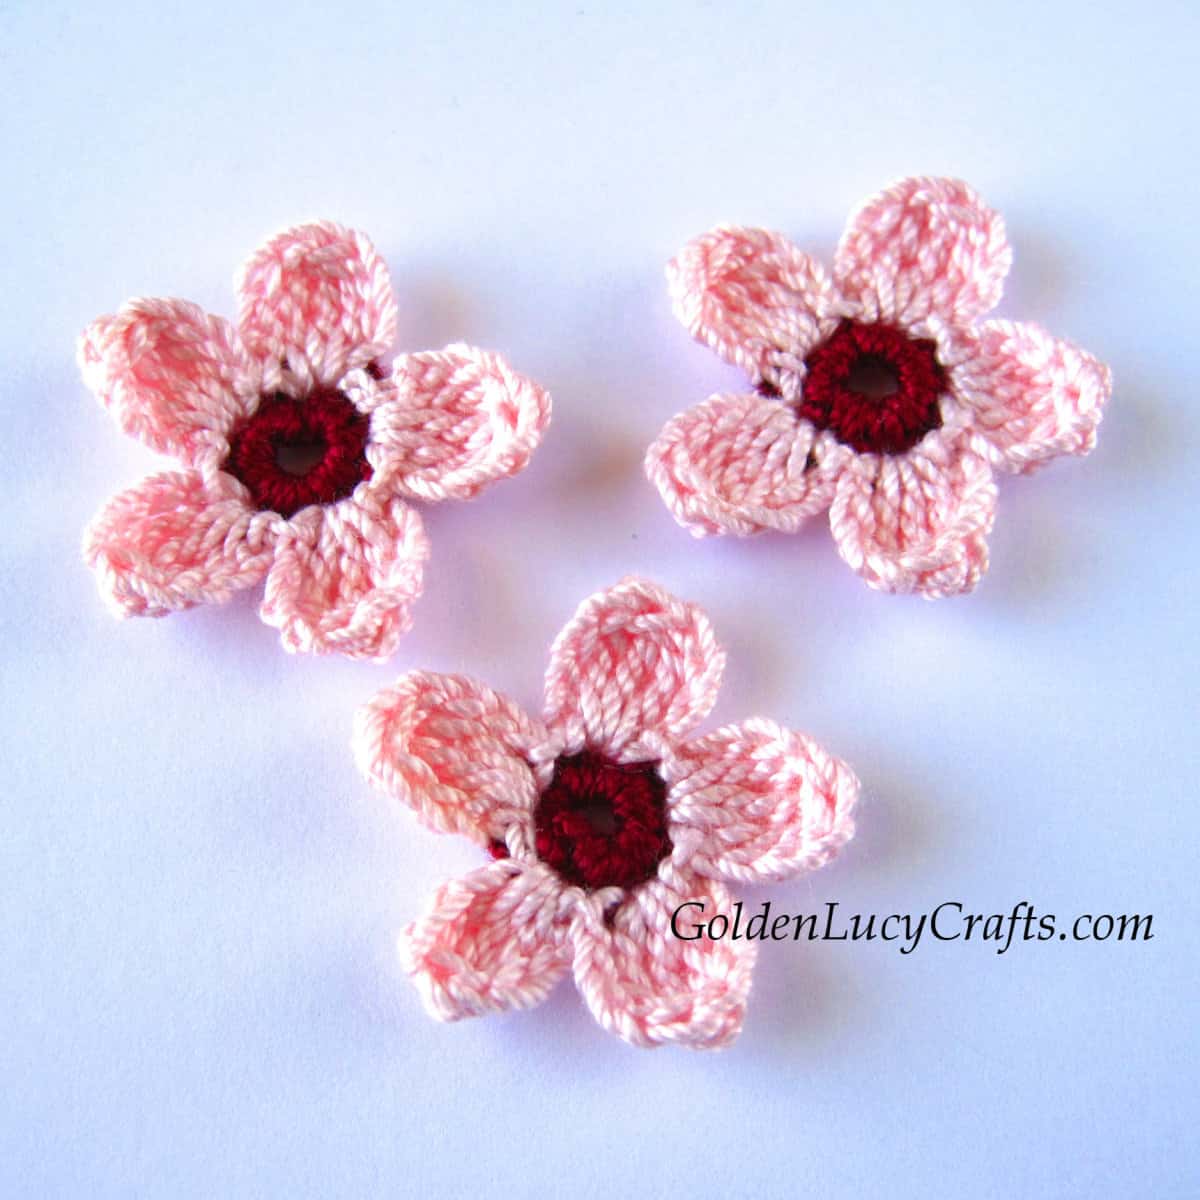 Three crocheted cherry blossom flowers.